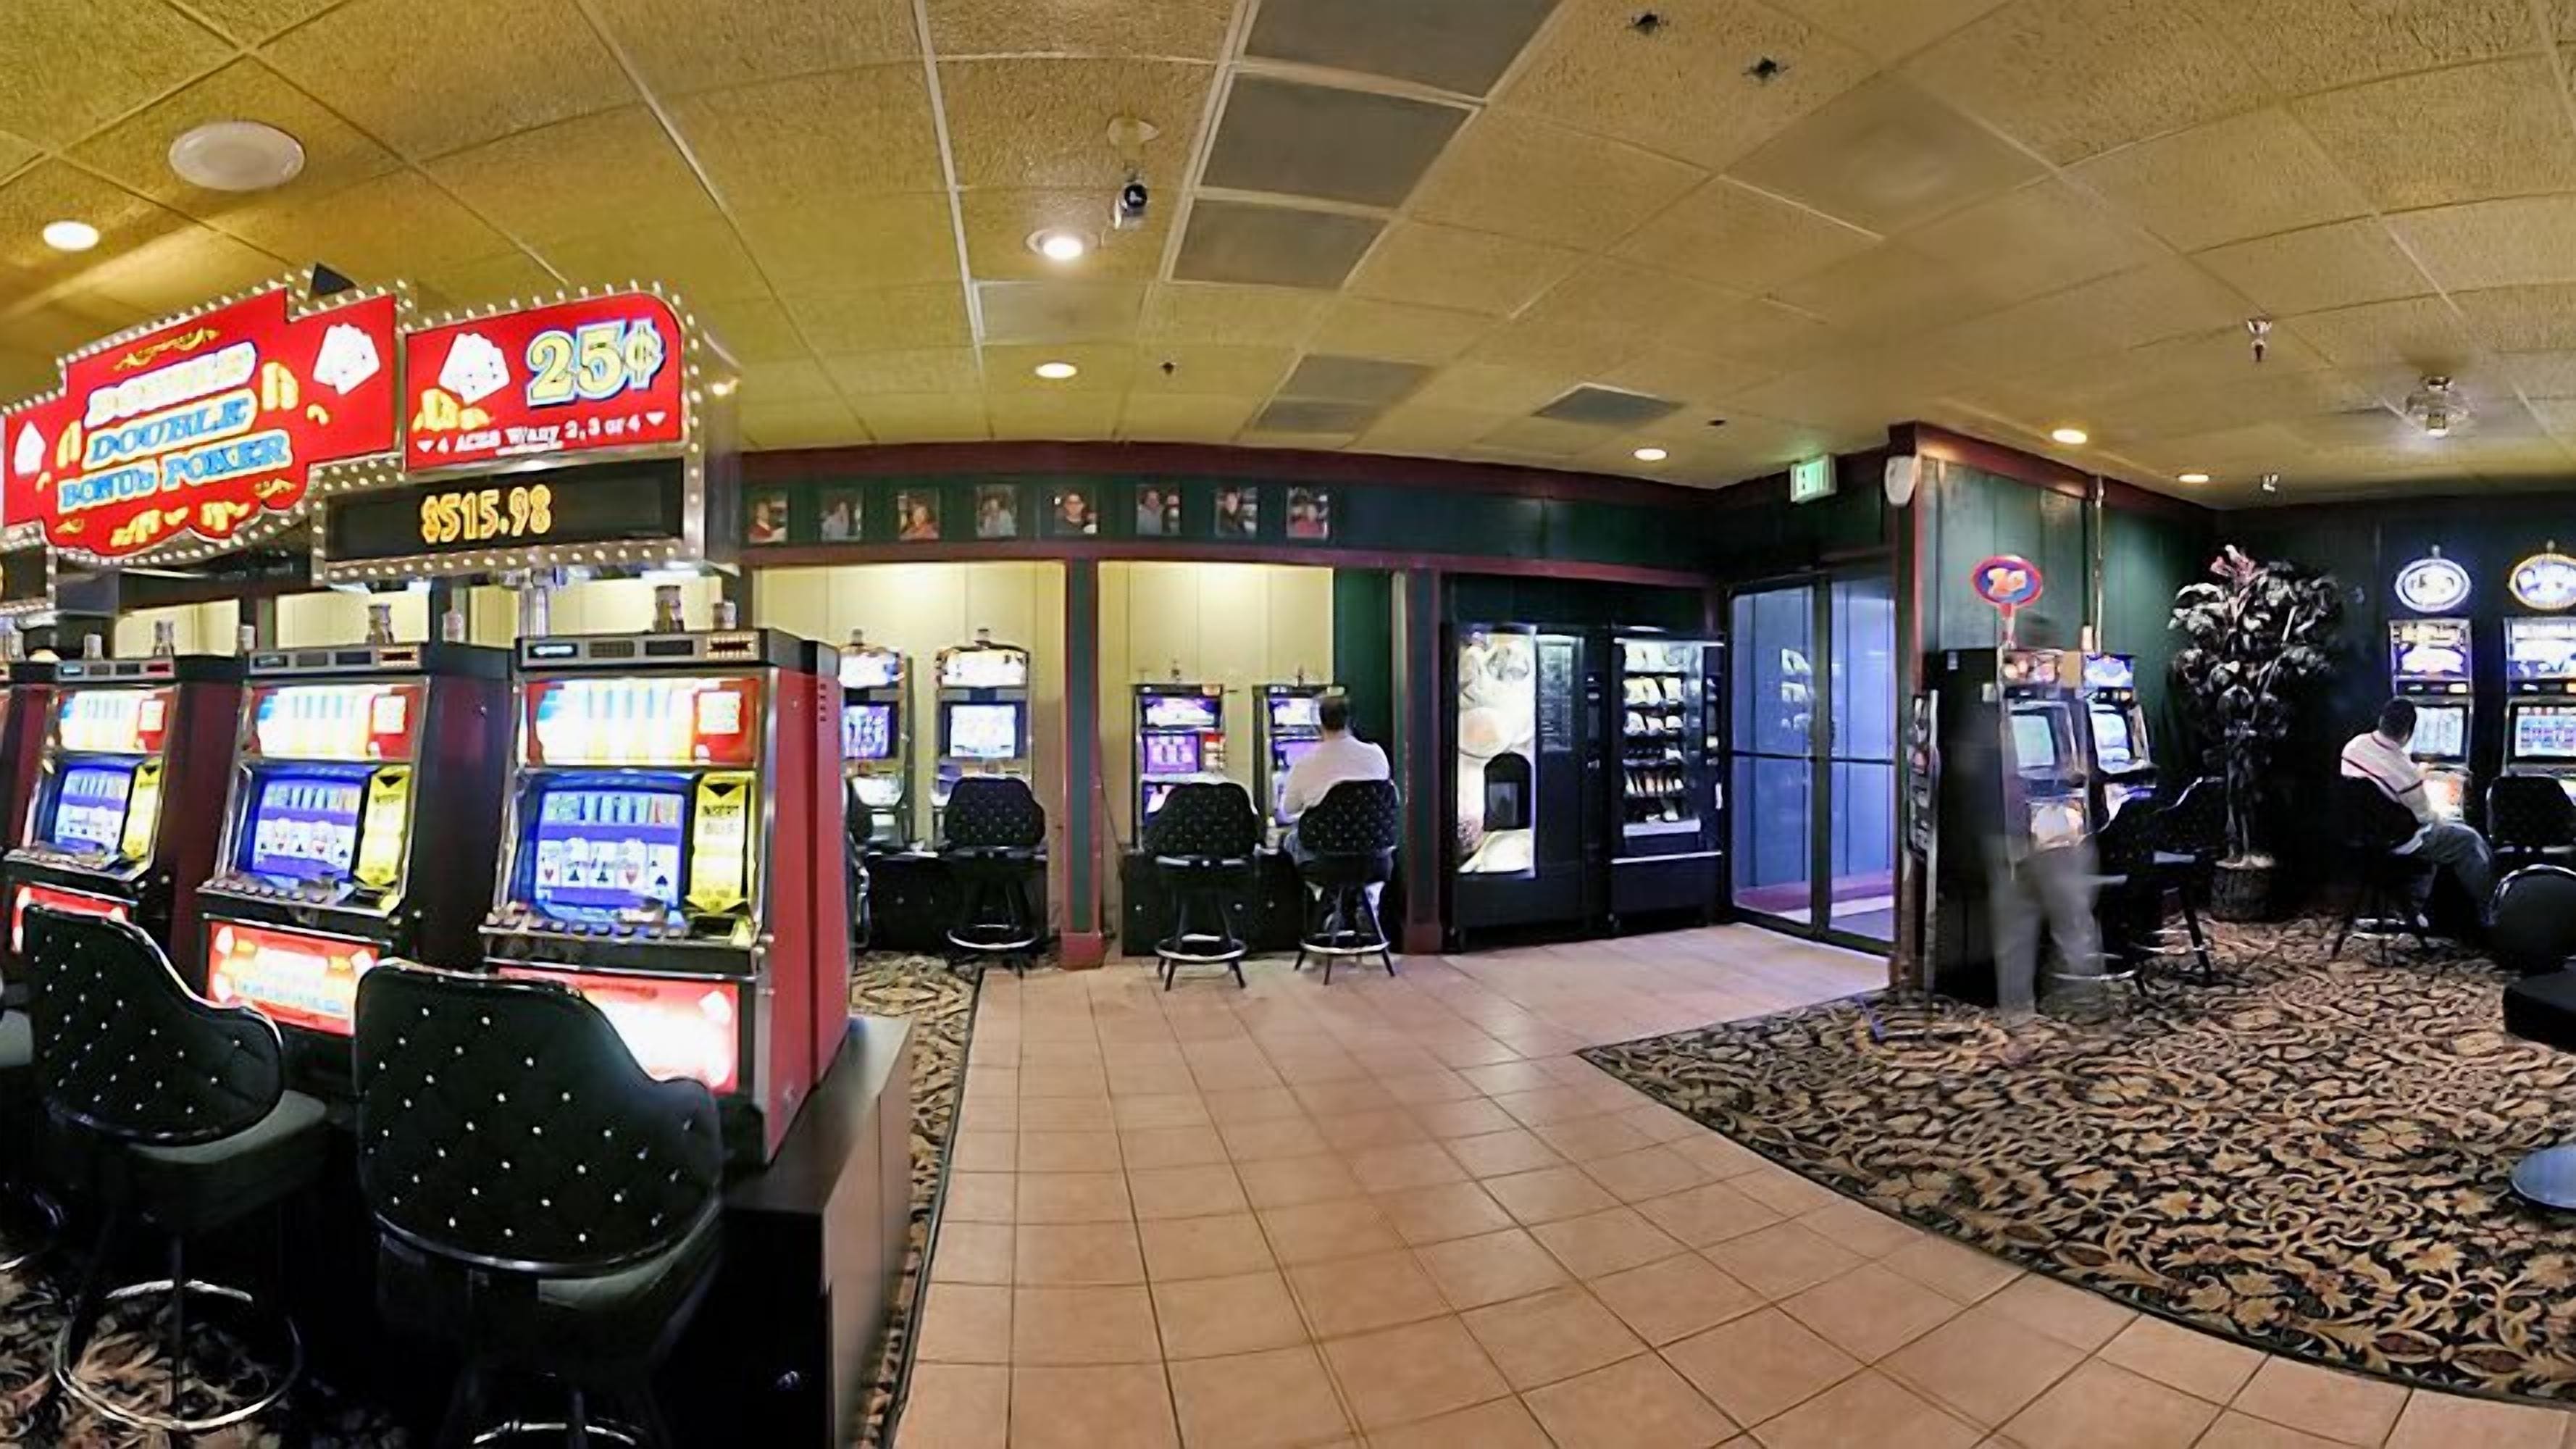 Days Inn by Wyndham Las Vegas Wild Wild West Gambling Hall